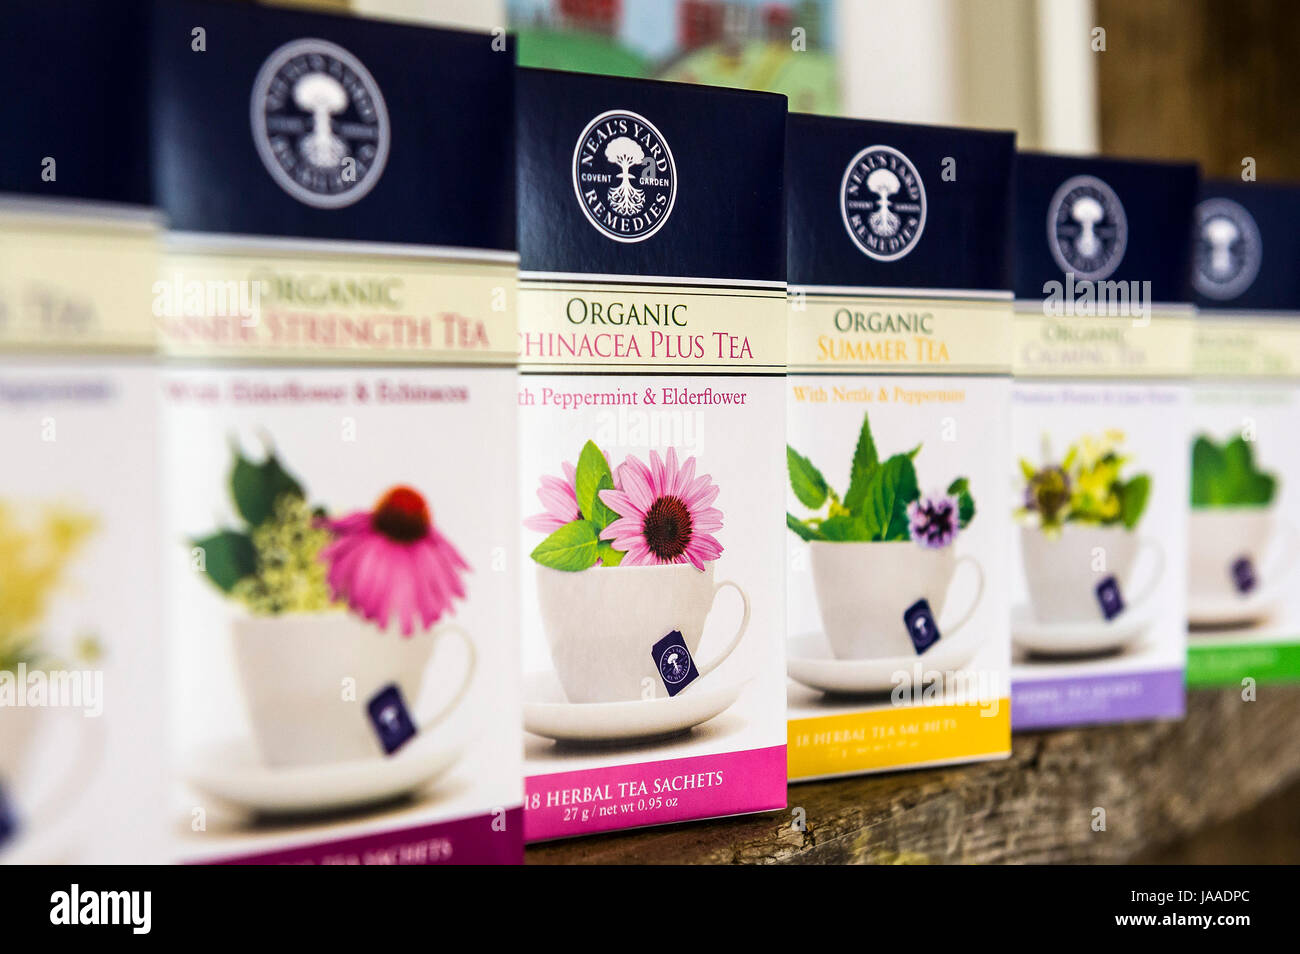 Boxes of Neals Yard Organic Herbal Tea on sale. Stock Photo